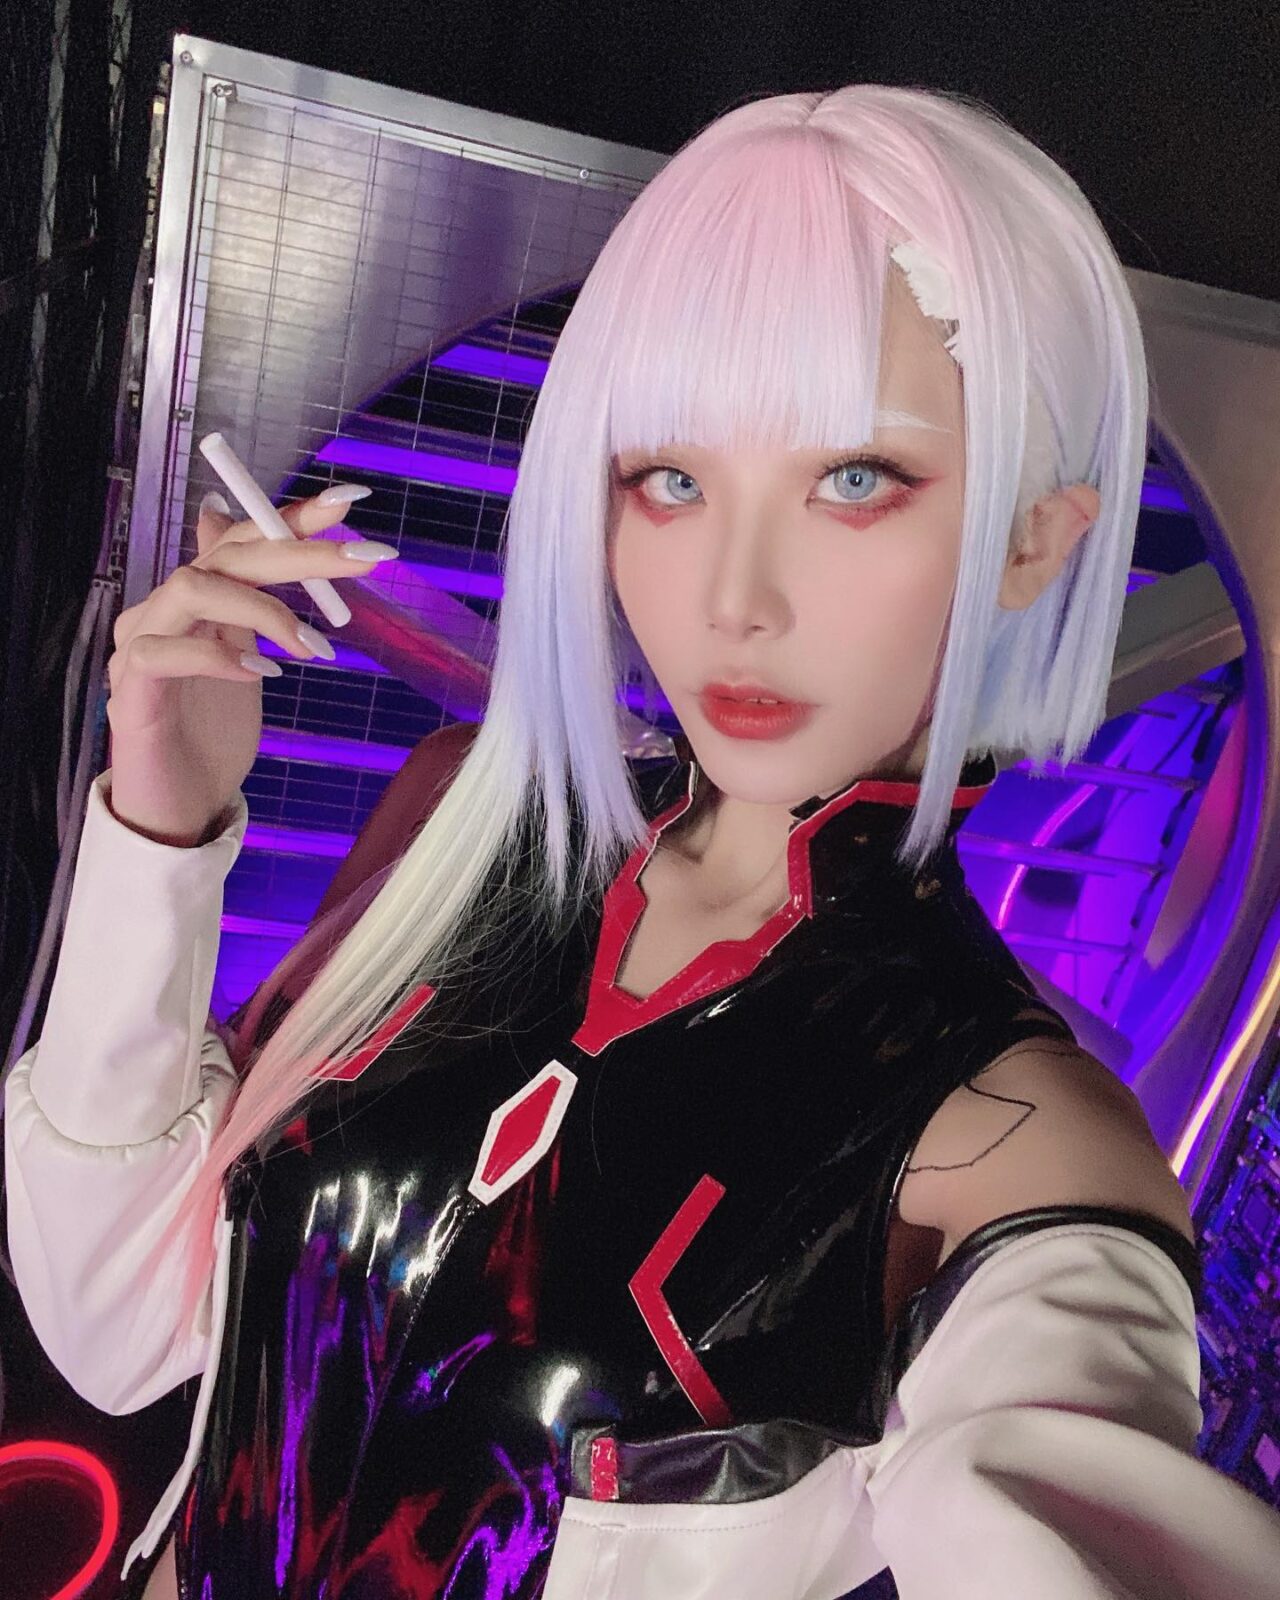 Modelo naki_lam fez um lindo cosplay da Lucy de Cyberpunk